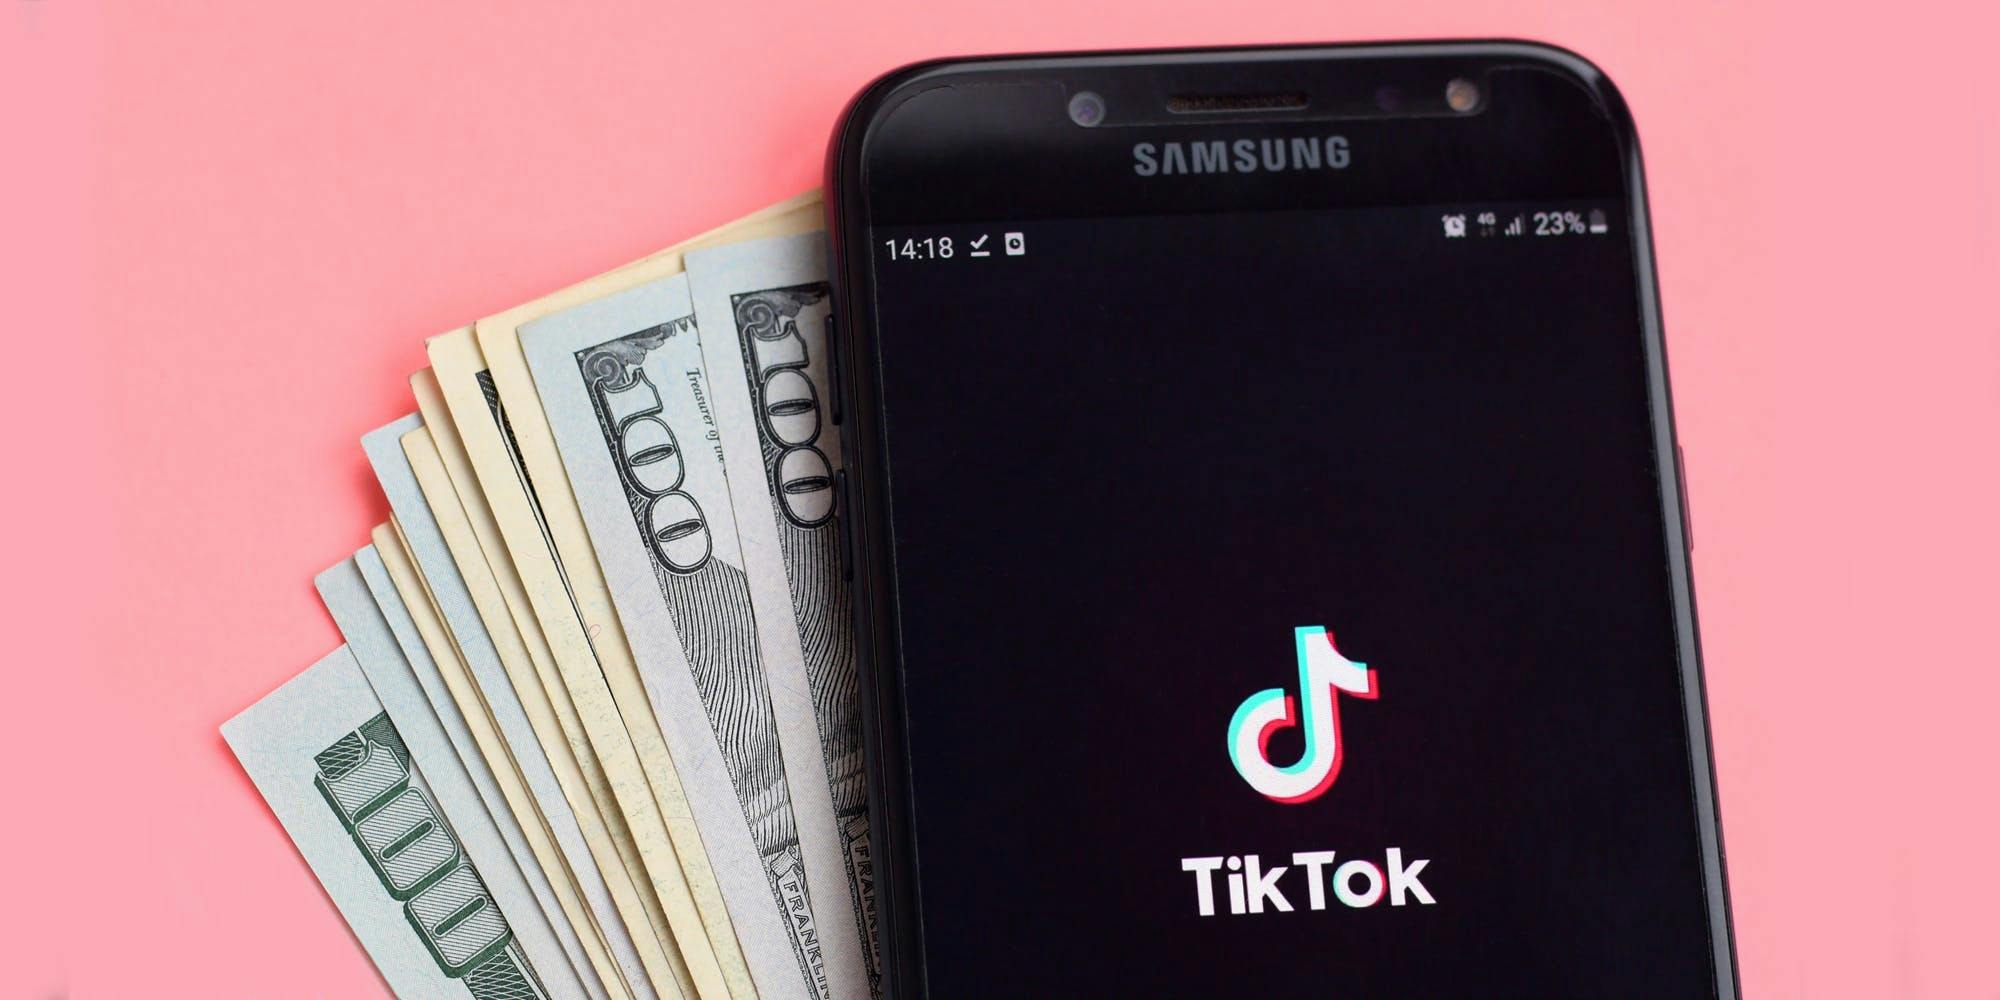 How to make money on TikTok